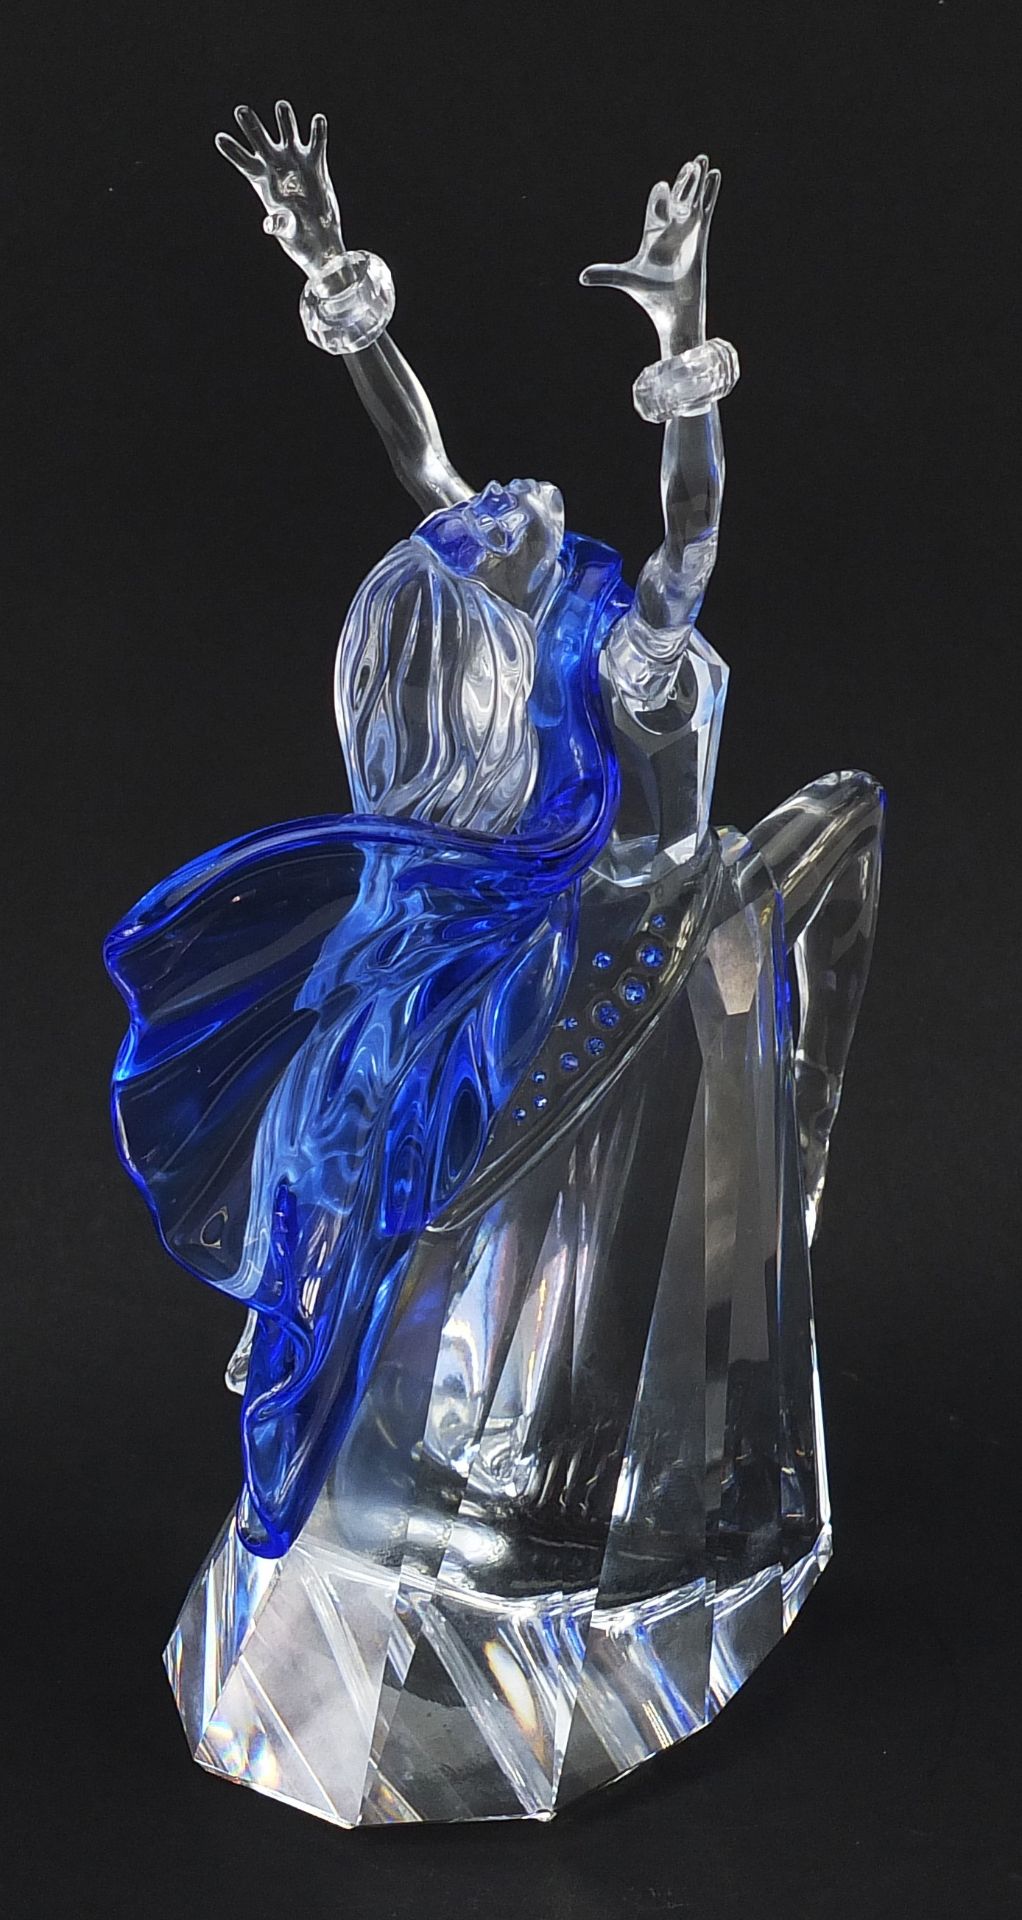 Swarovski Crystal Magic of Dance figurine with box, 19.5cm high - Image 2 of 6